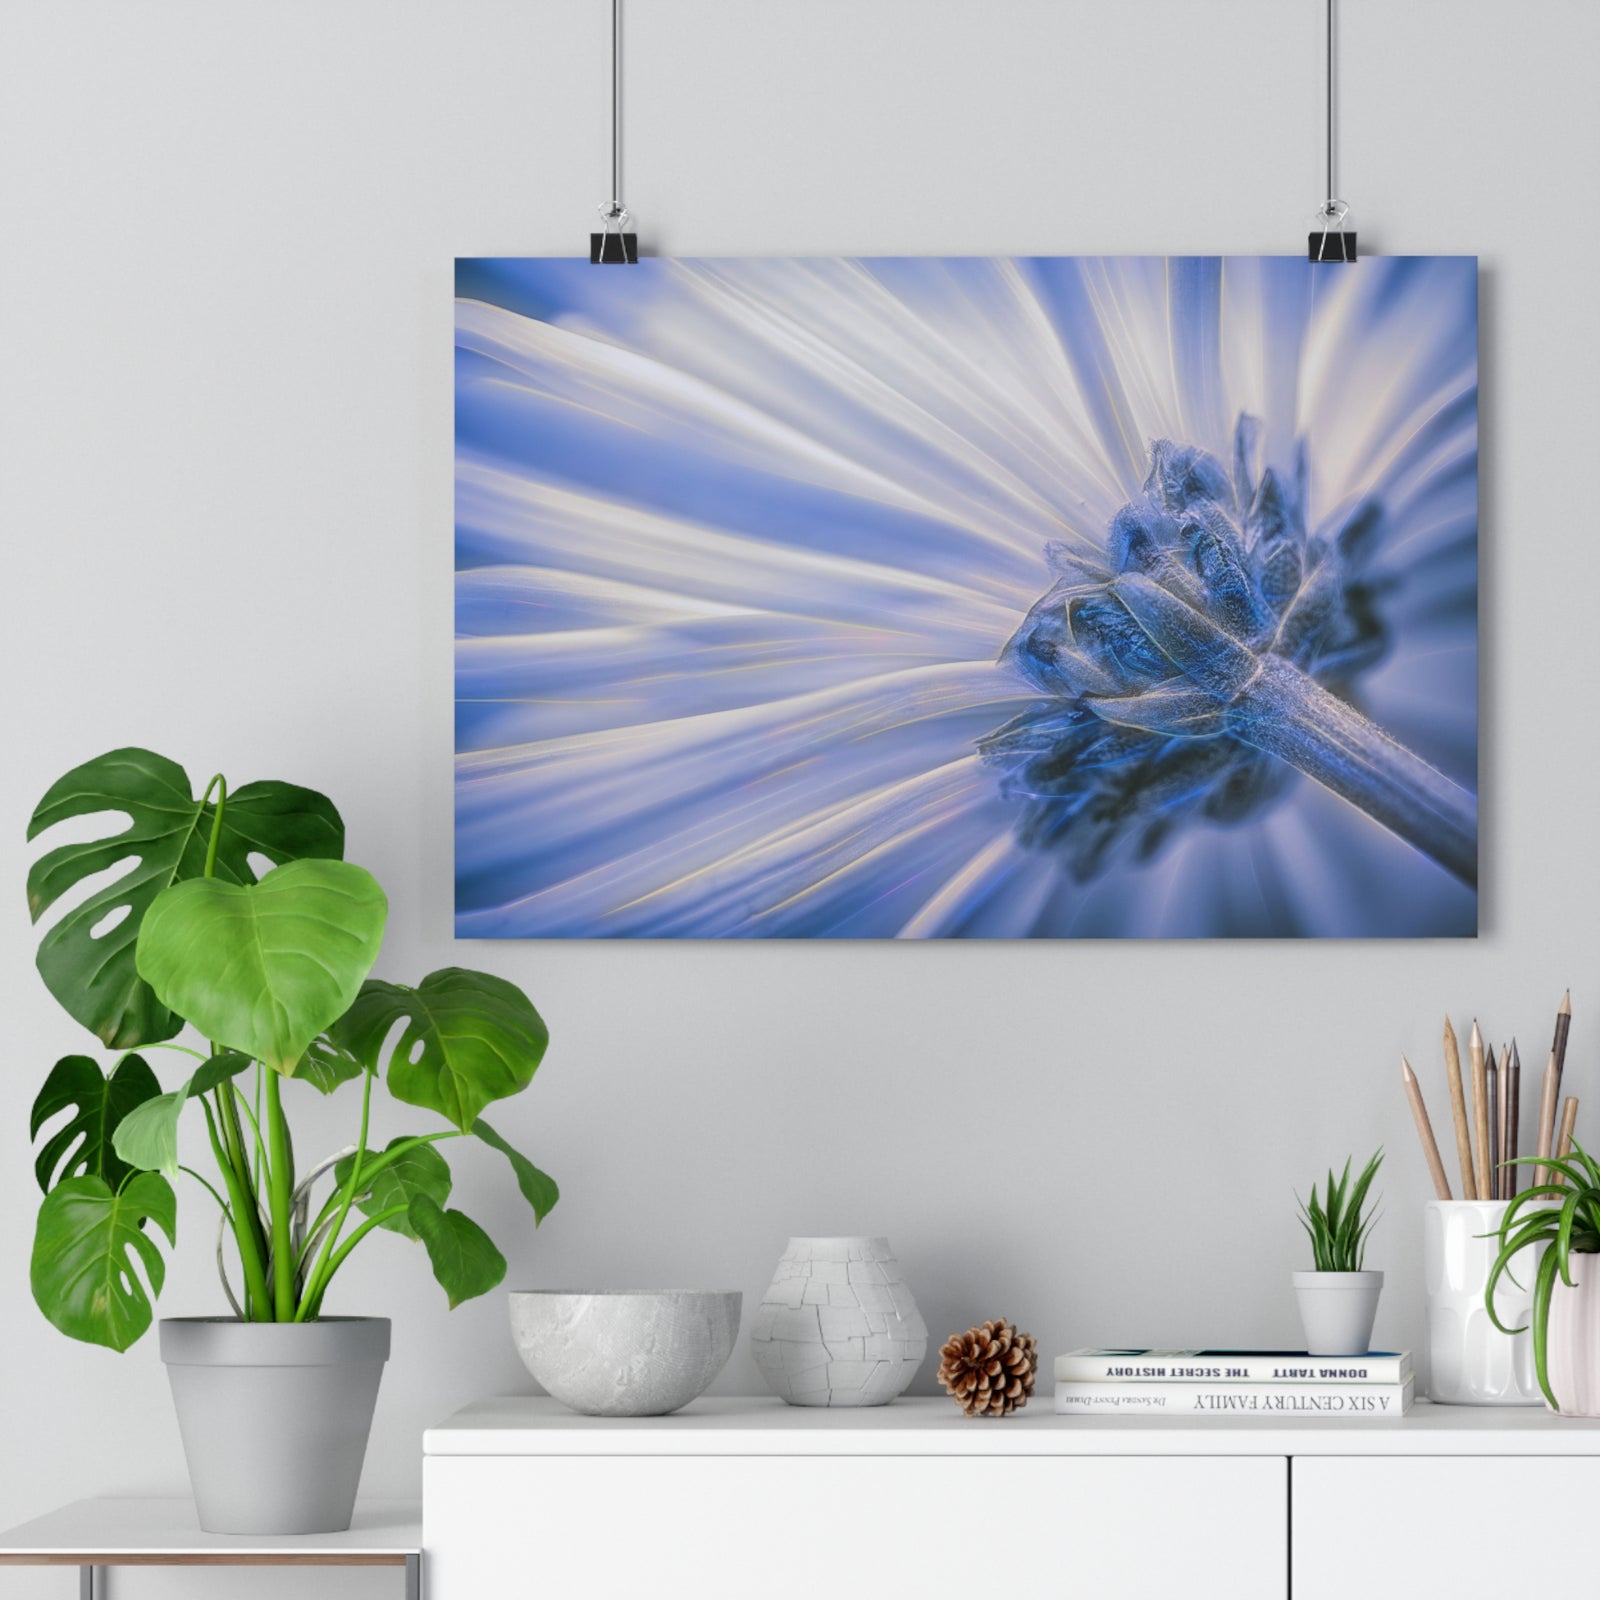 Blues de crisantemo de ensueño Lámina artística